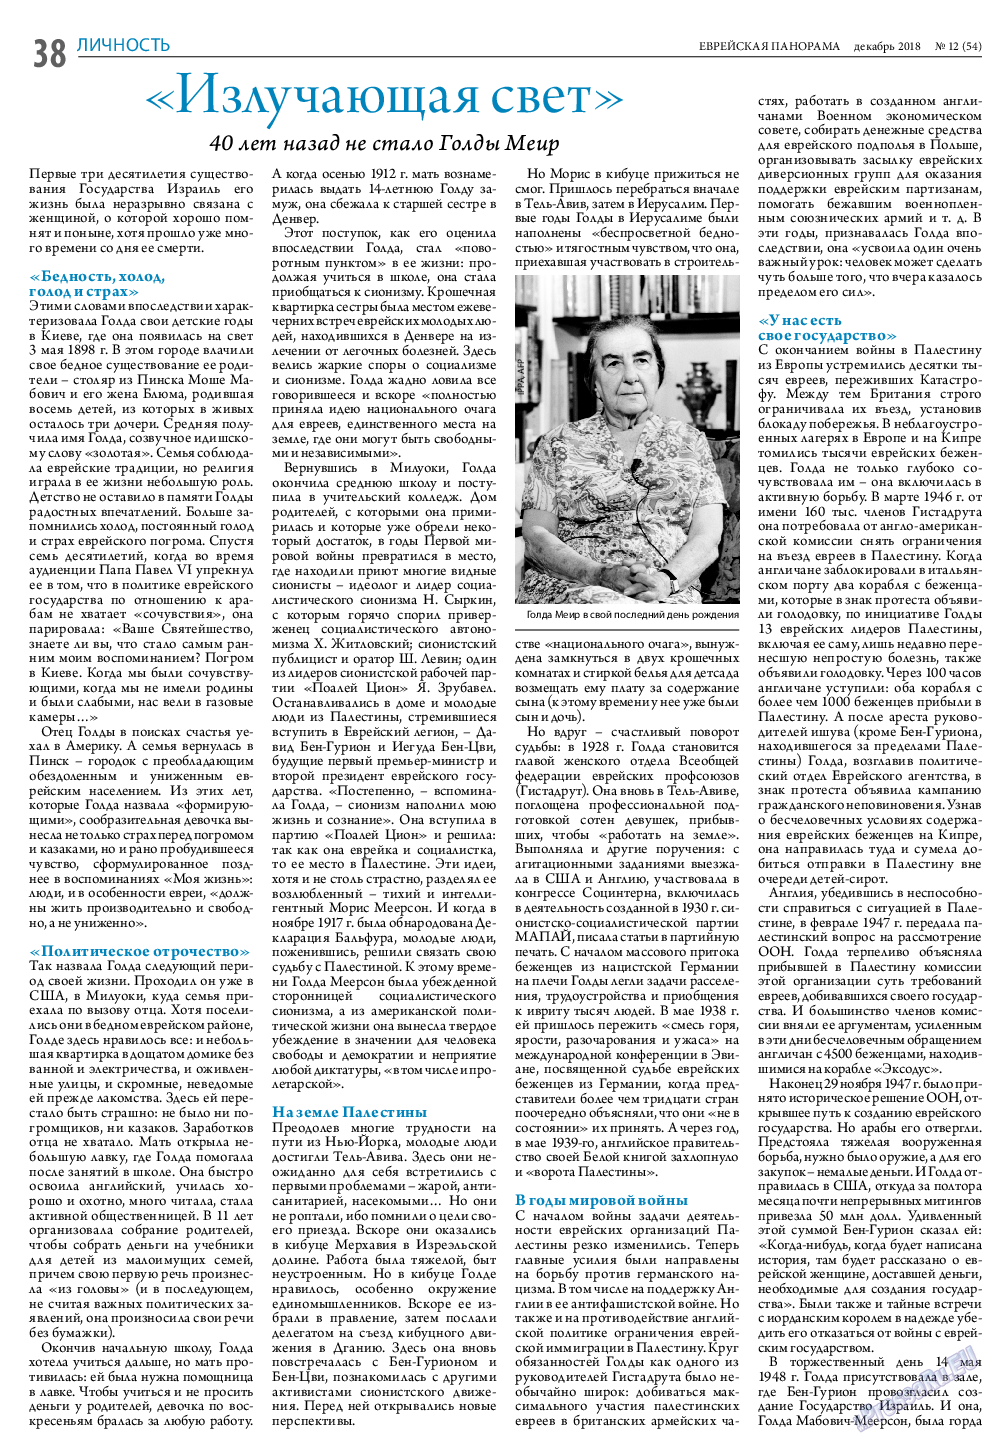 Еврейская панорама, газета. 2018 №12 стр.38